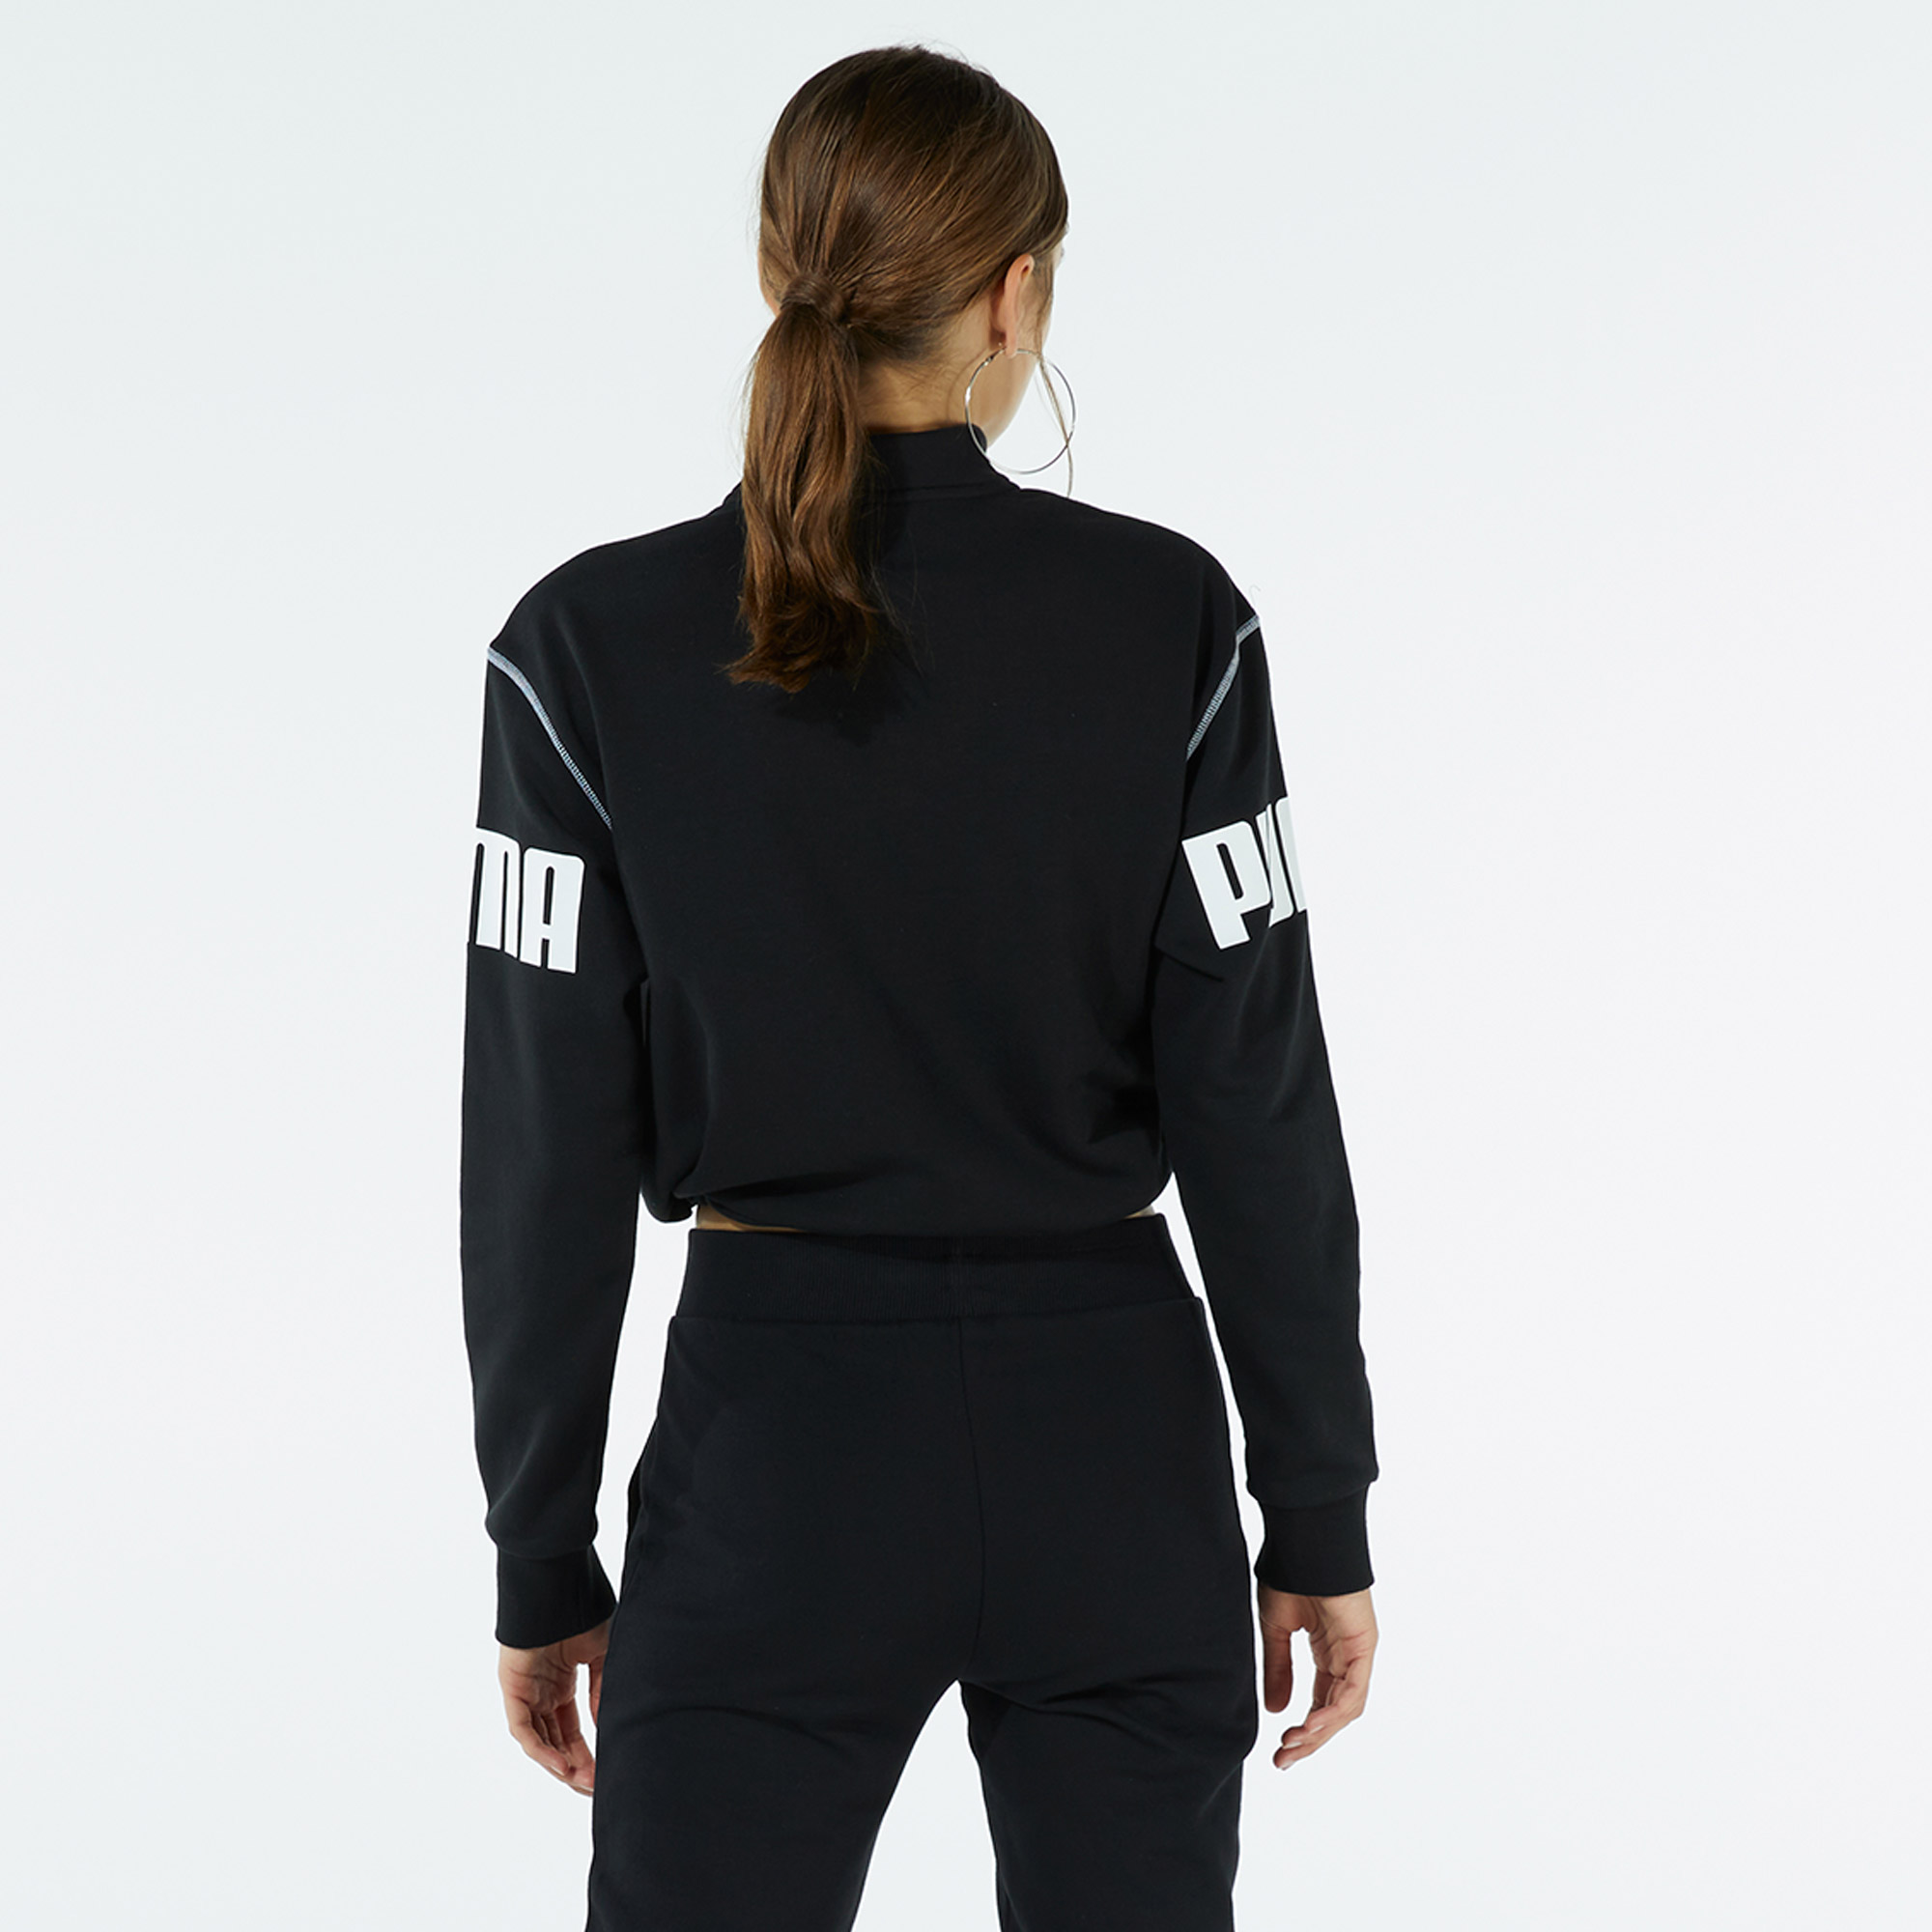 Puma Power Kadın Siyah Sweatshirt